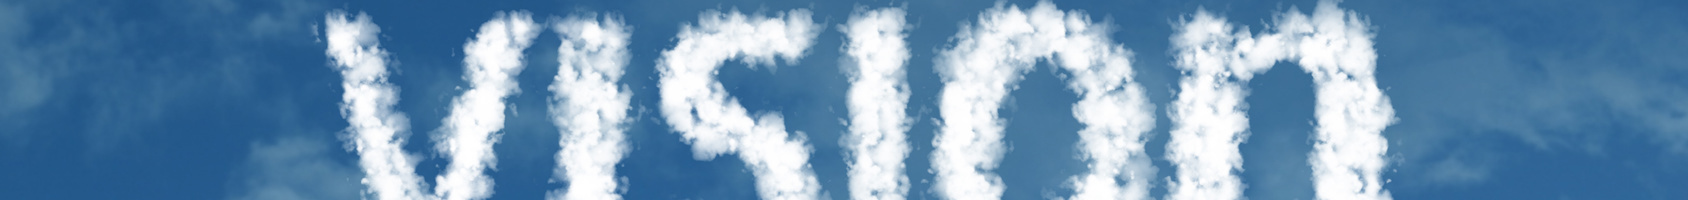 ABC AnwaltsBeratung Cosack - Mainz - Strategieplanung - Vision als Wolken im Himmel